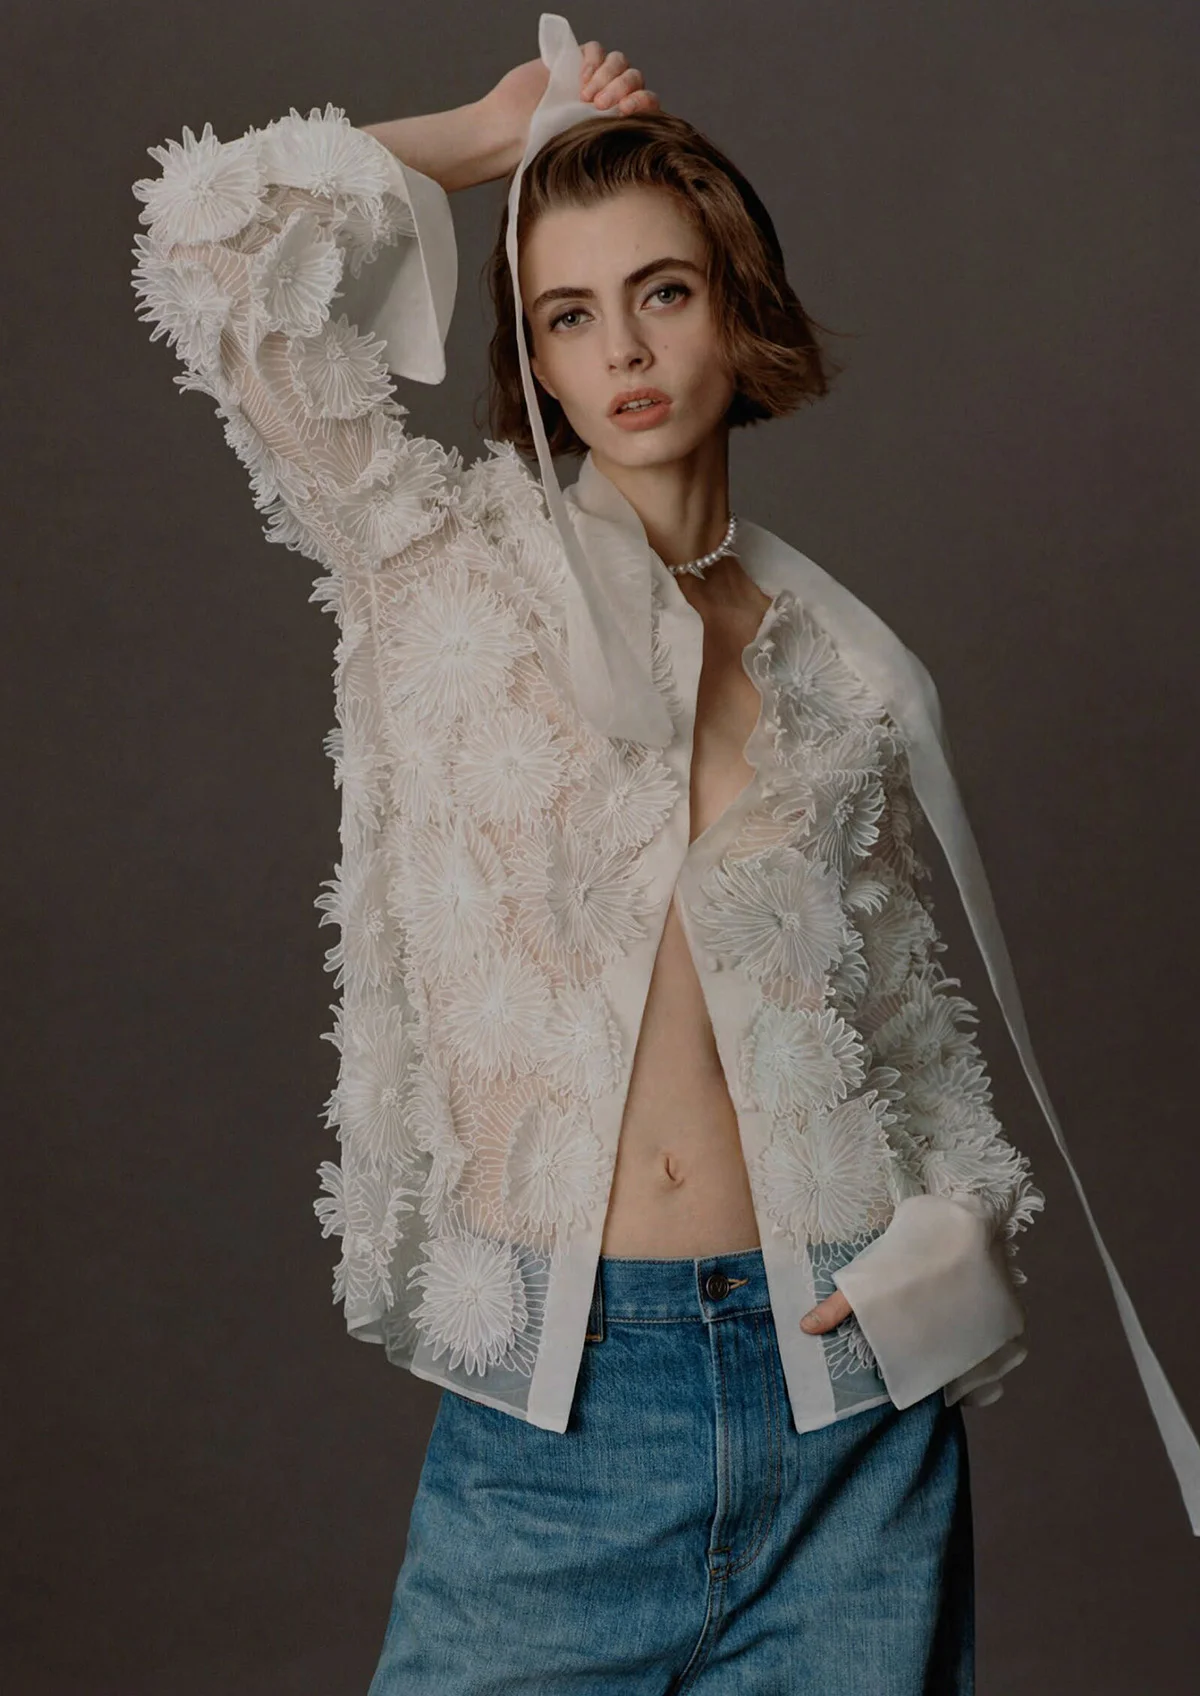 Patrycja Piekarska by Matt Healy for British Vogue April 2022